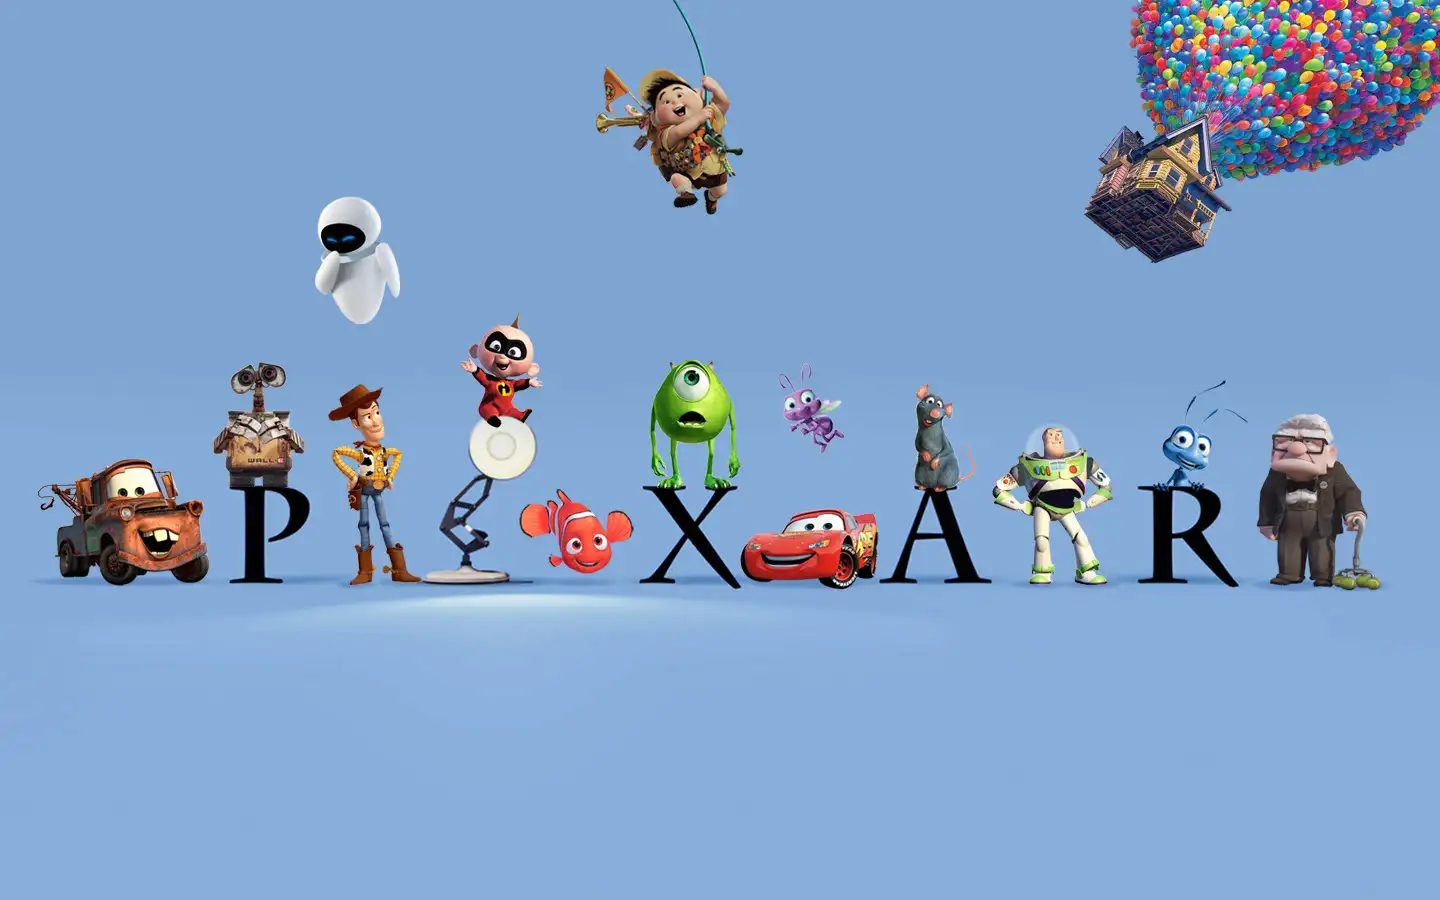 Pixar image